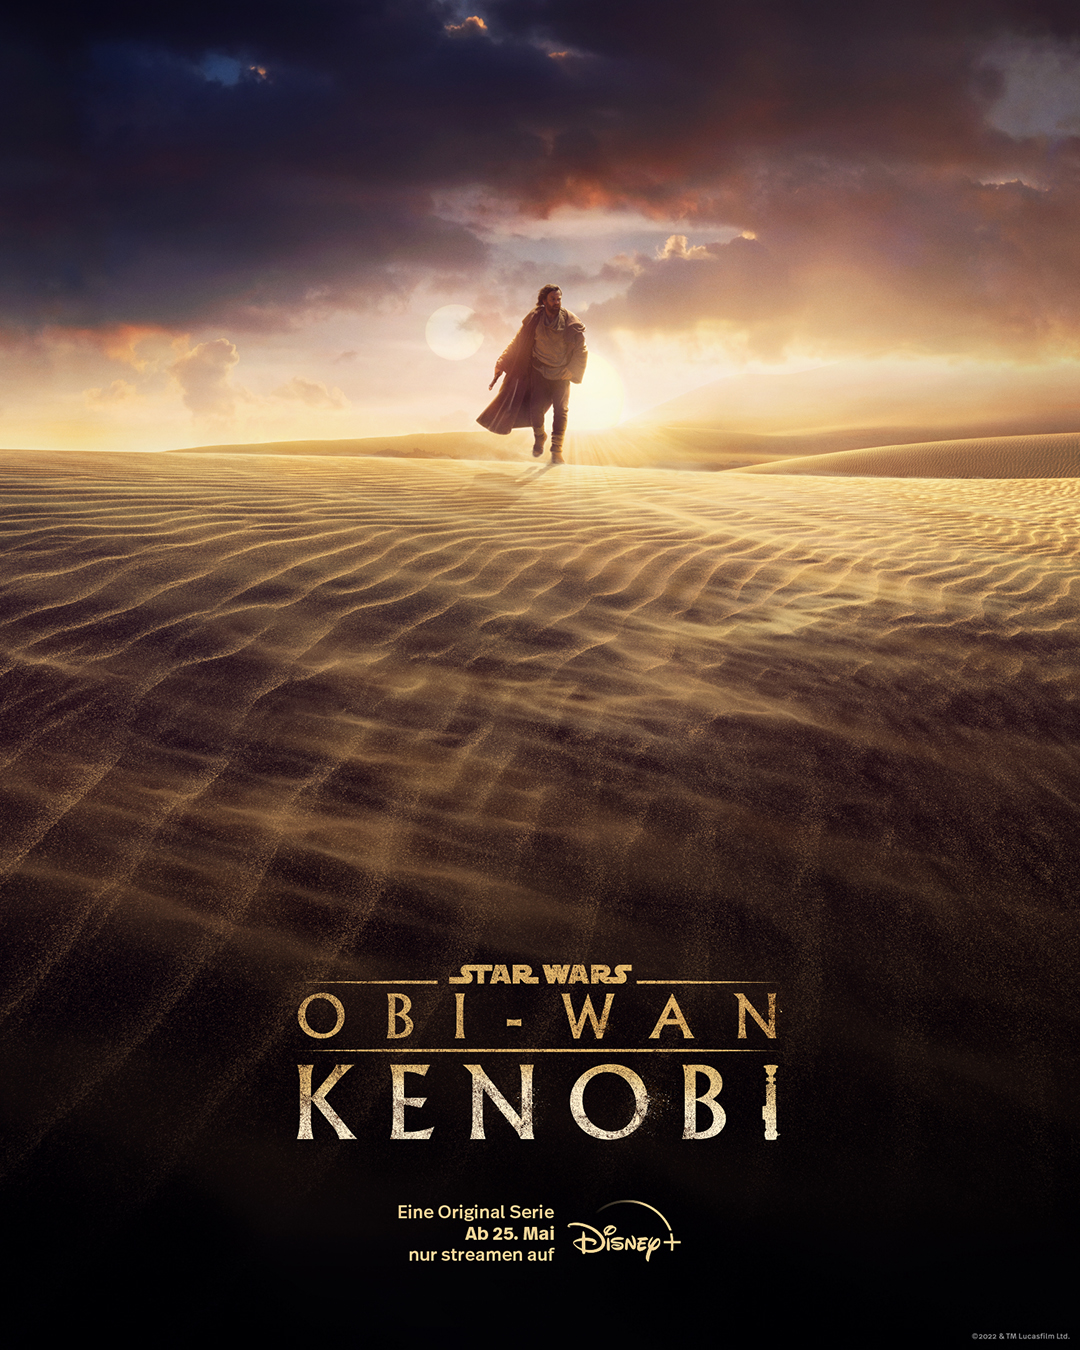 "Obi-Wan Kenobi": John Williams komponiert die Musik zur kommenden Star Wars Serie